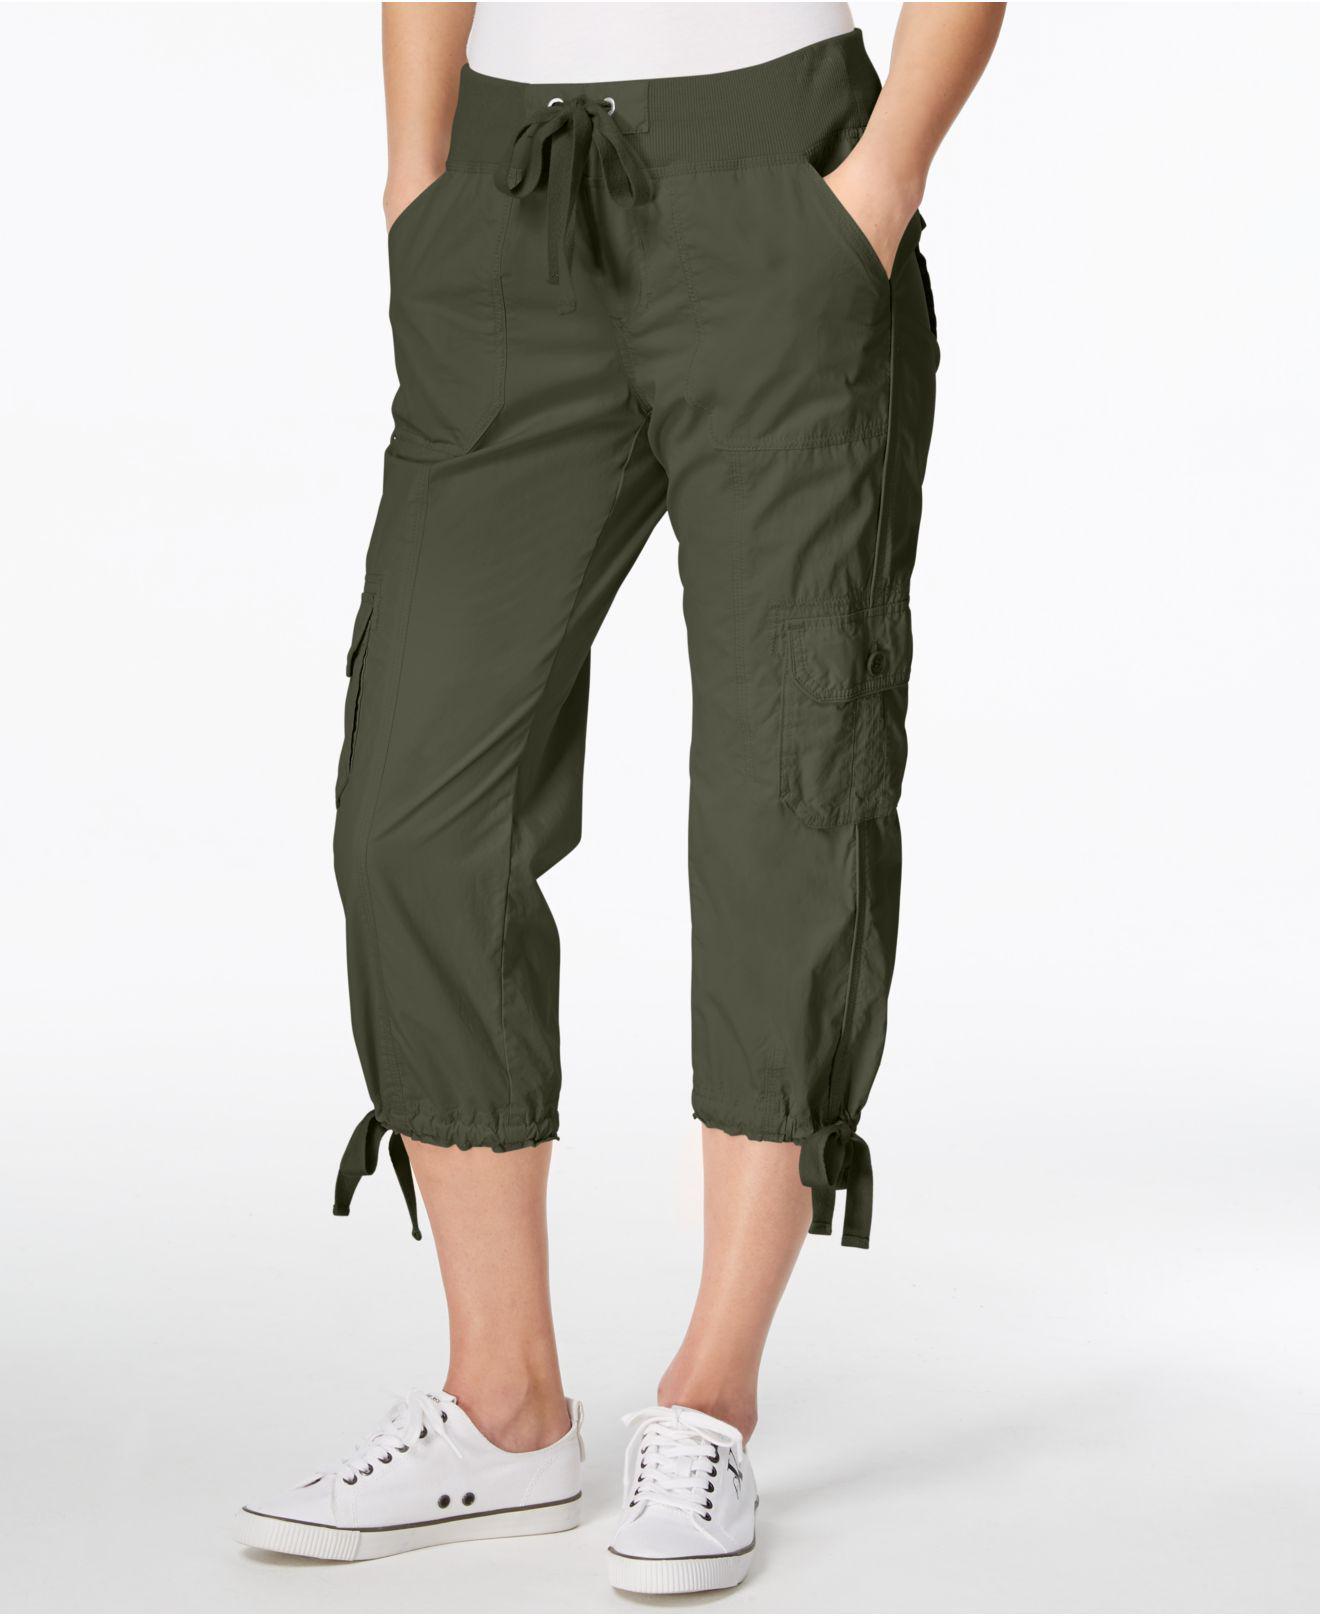 Lyst - Calvin Klein Performance Poplin Capri Cargo Pants in Green